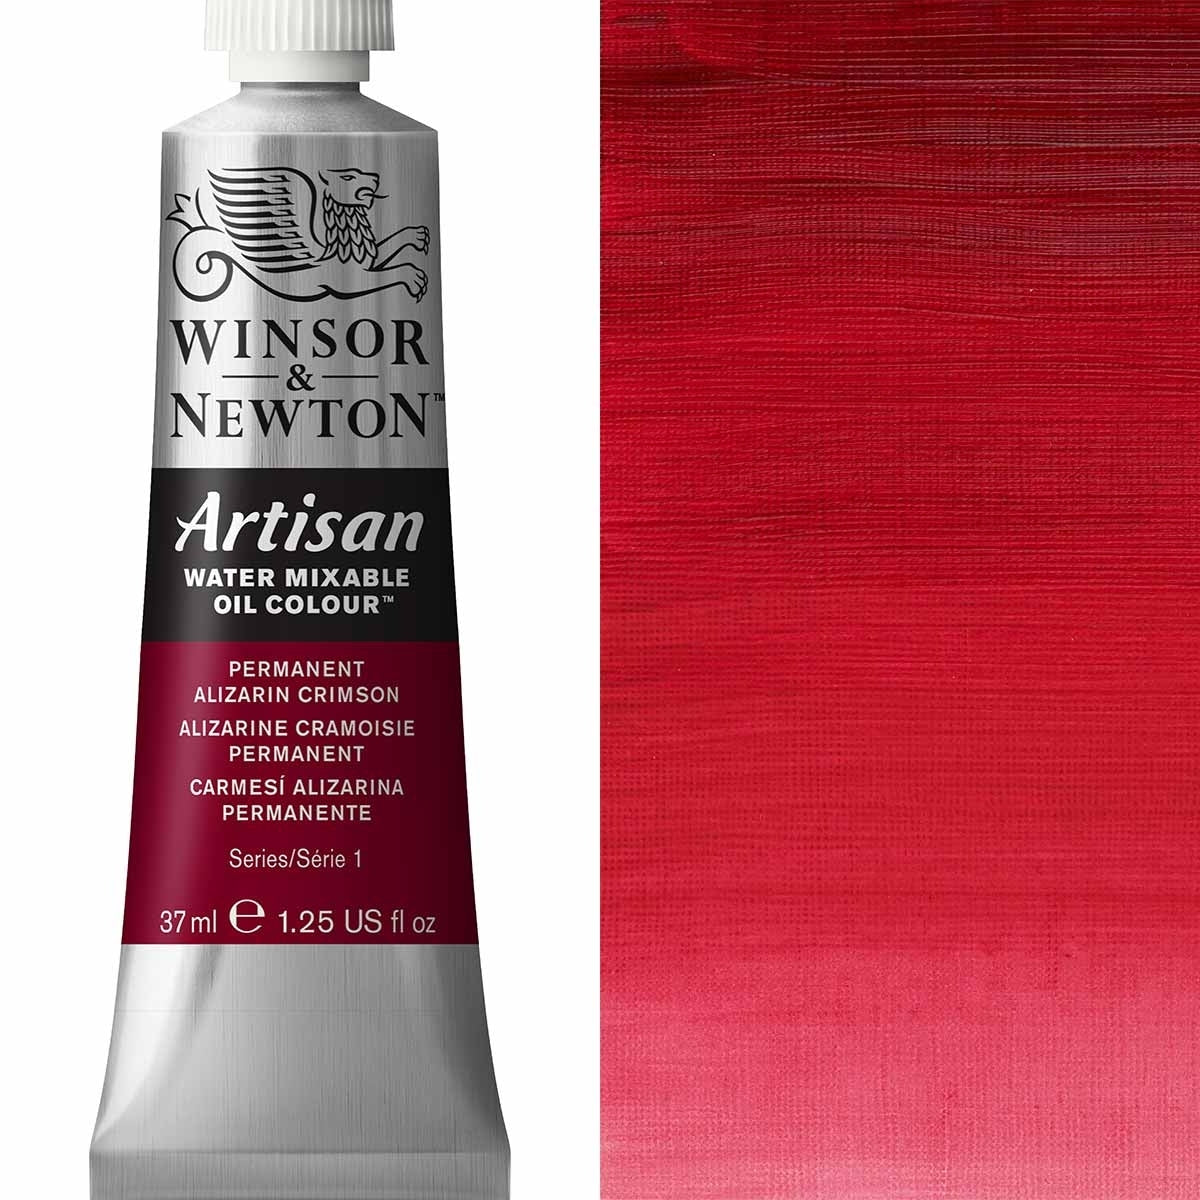 Winsor and Newton - Artisan Oil Colour Watermixable - 37ml - Permanent Alizarin Crimson